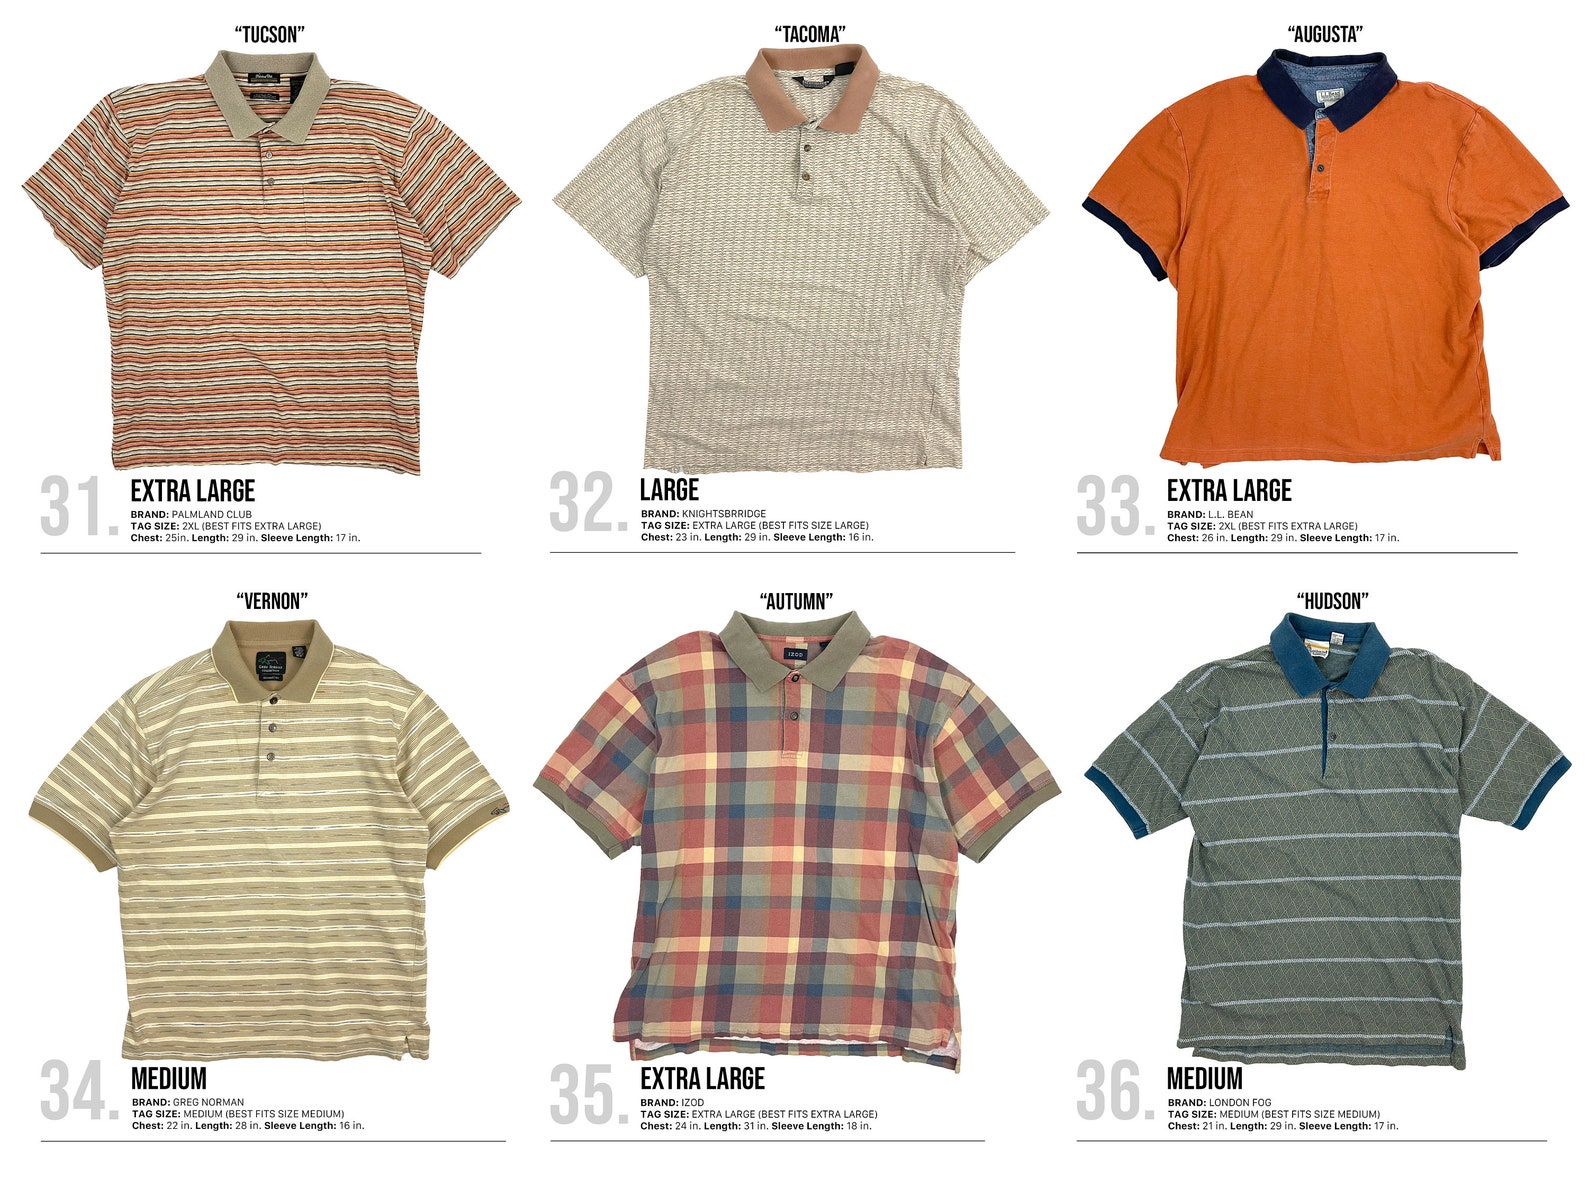 Vintage Polo Shirts Golf Shirts 80s 90s Retro Styles - Etsy